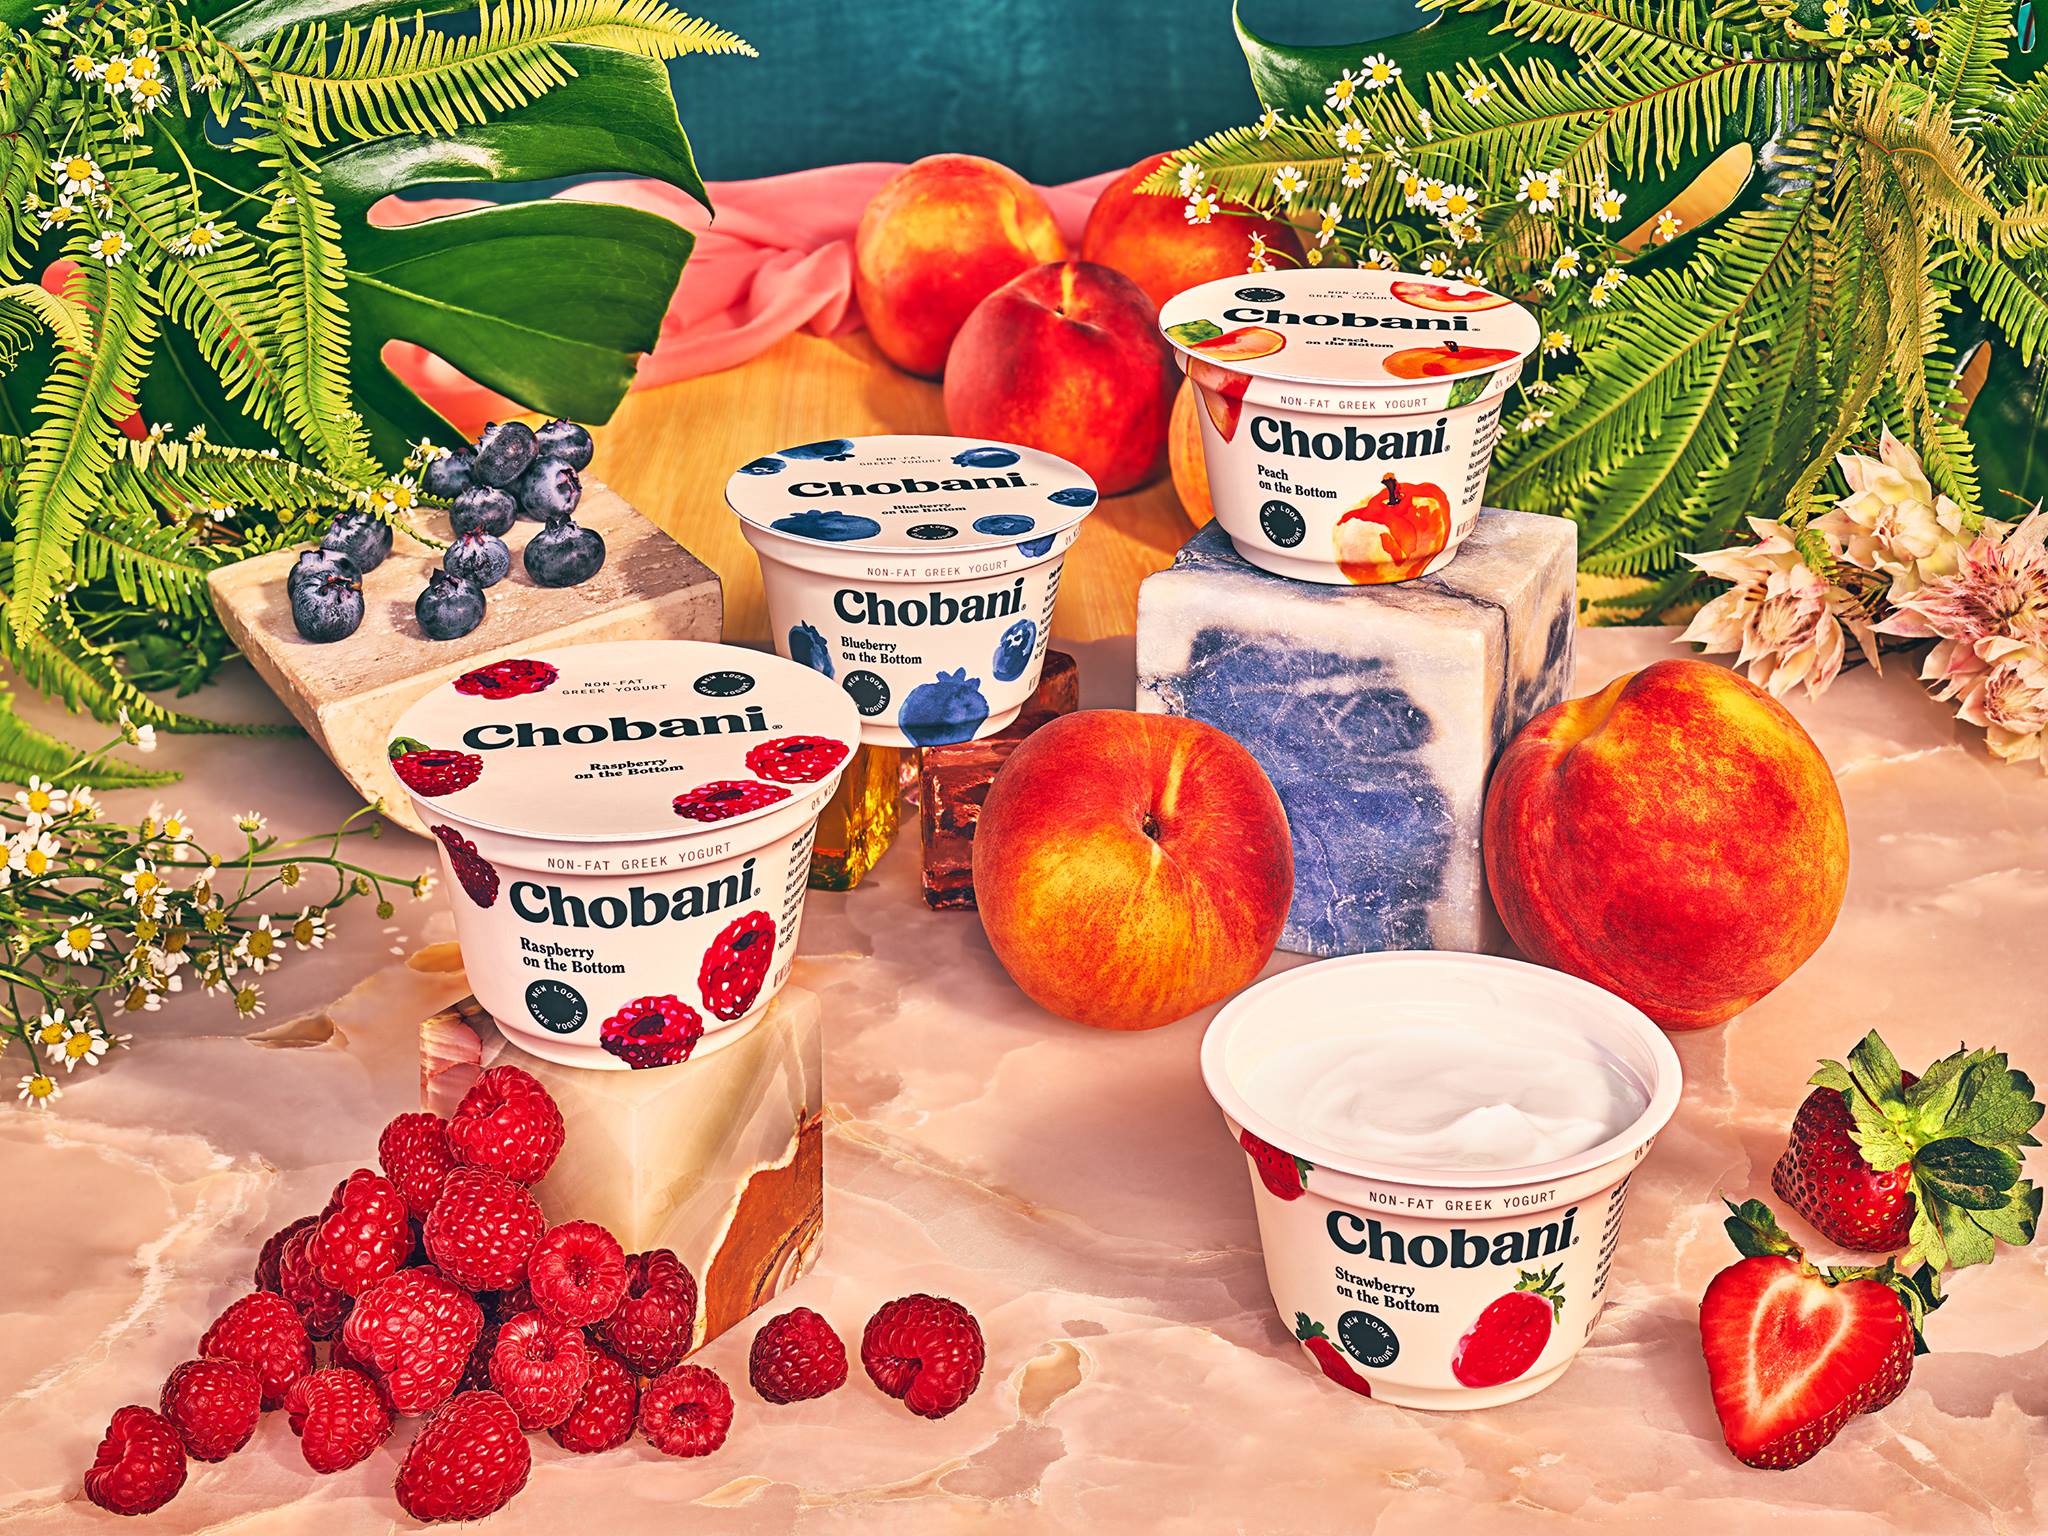 Expires soon! Get a coupon for free Chobani yogurt